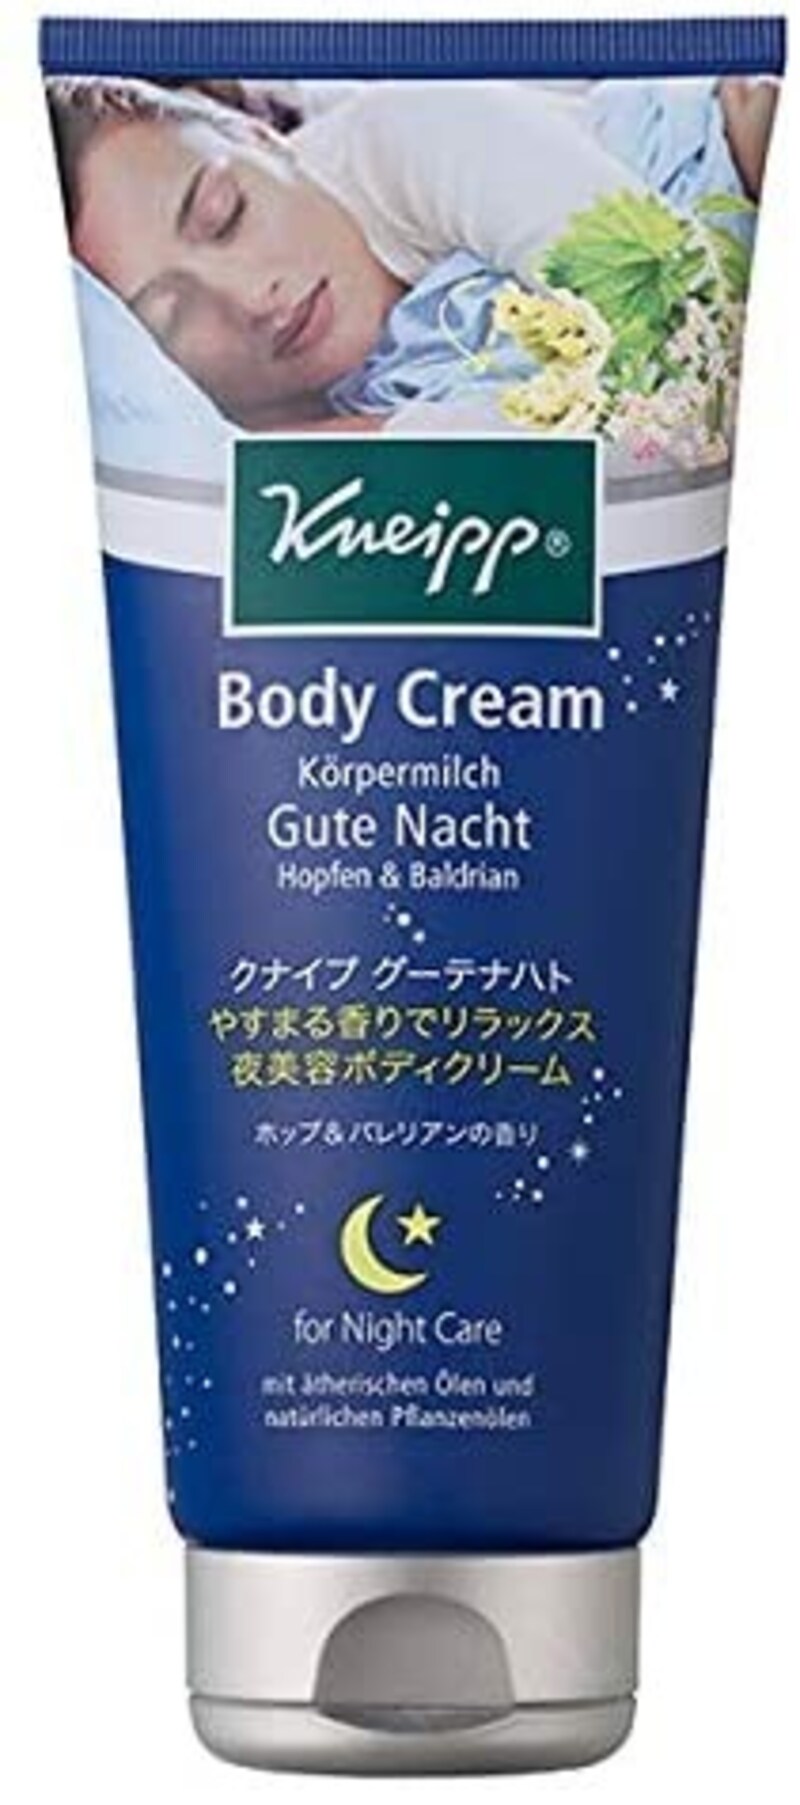 Kneipp（クナイプジャパン）,グーテナハトボディクリーム ホップ＆バレリアンの香り